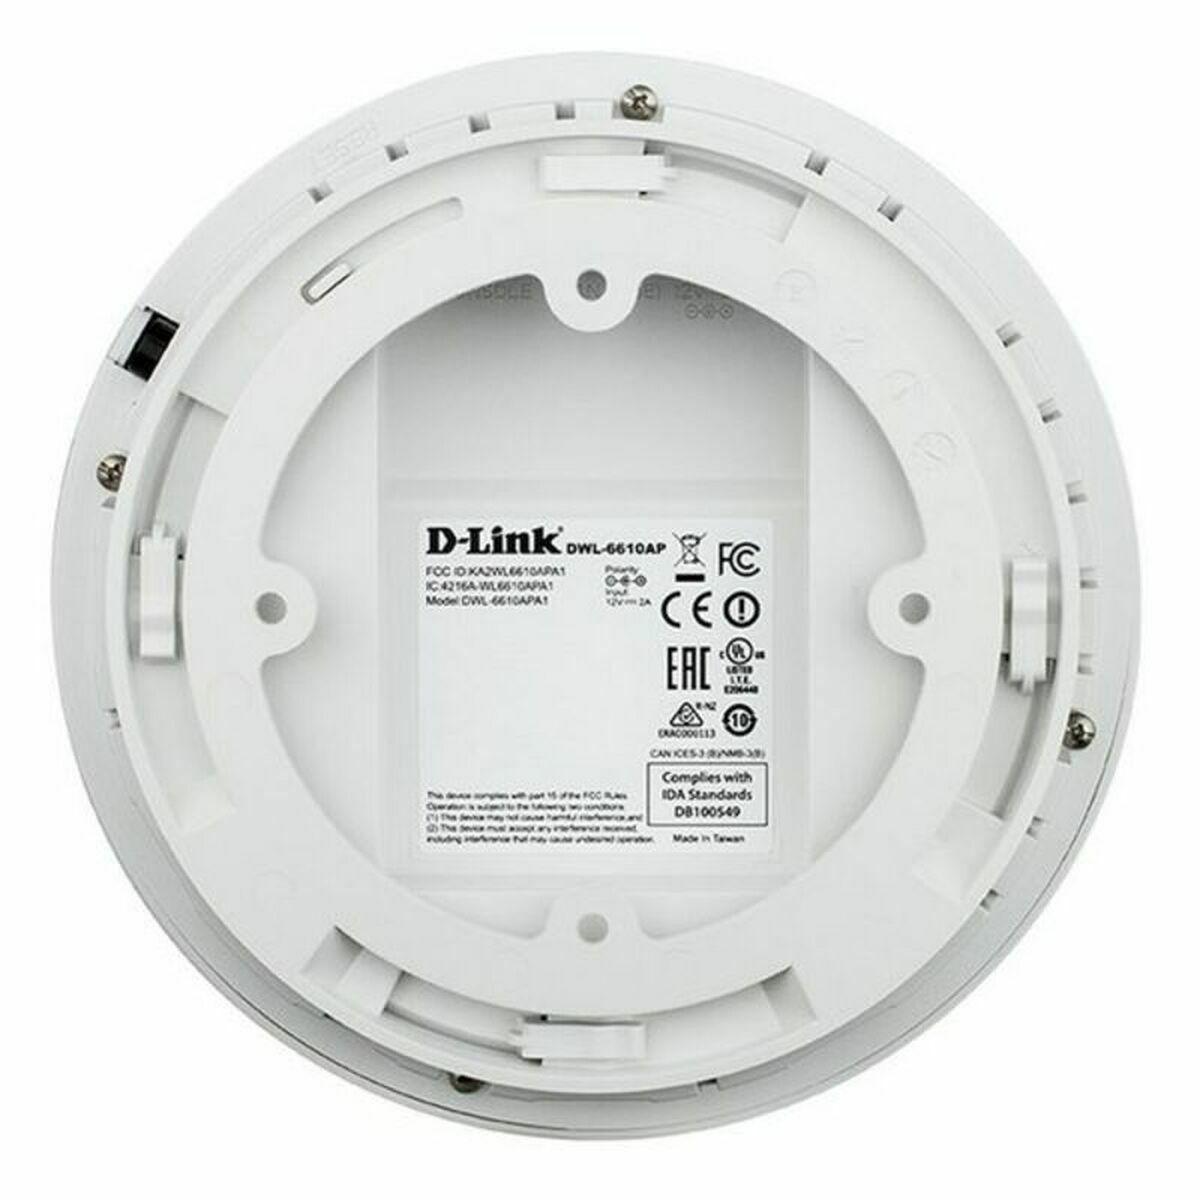 Access point D-Link DWL-6610AP White Black-1